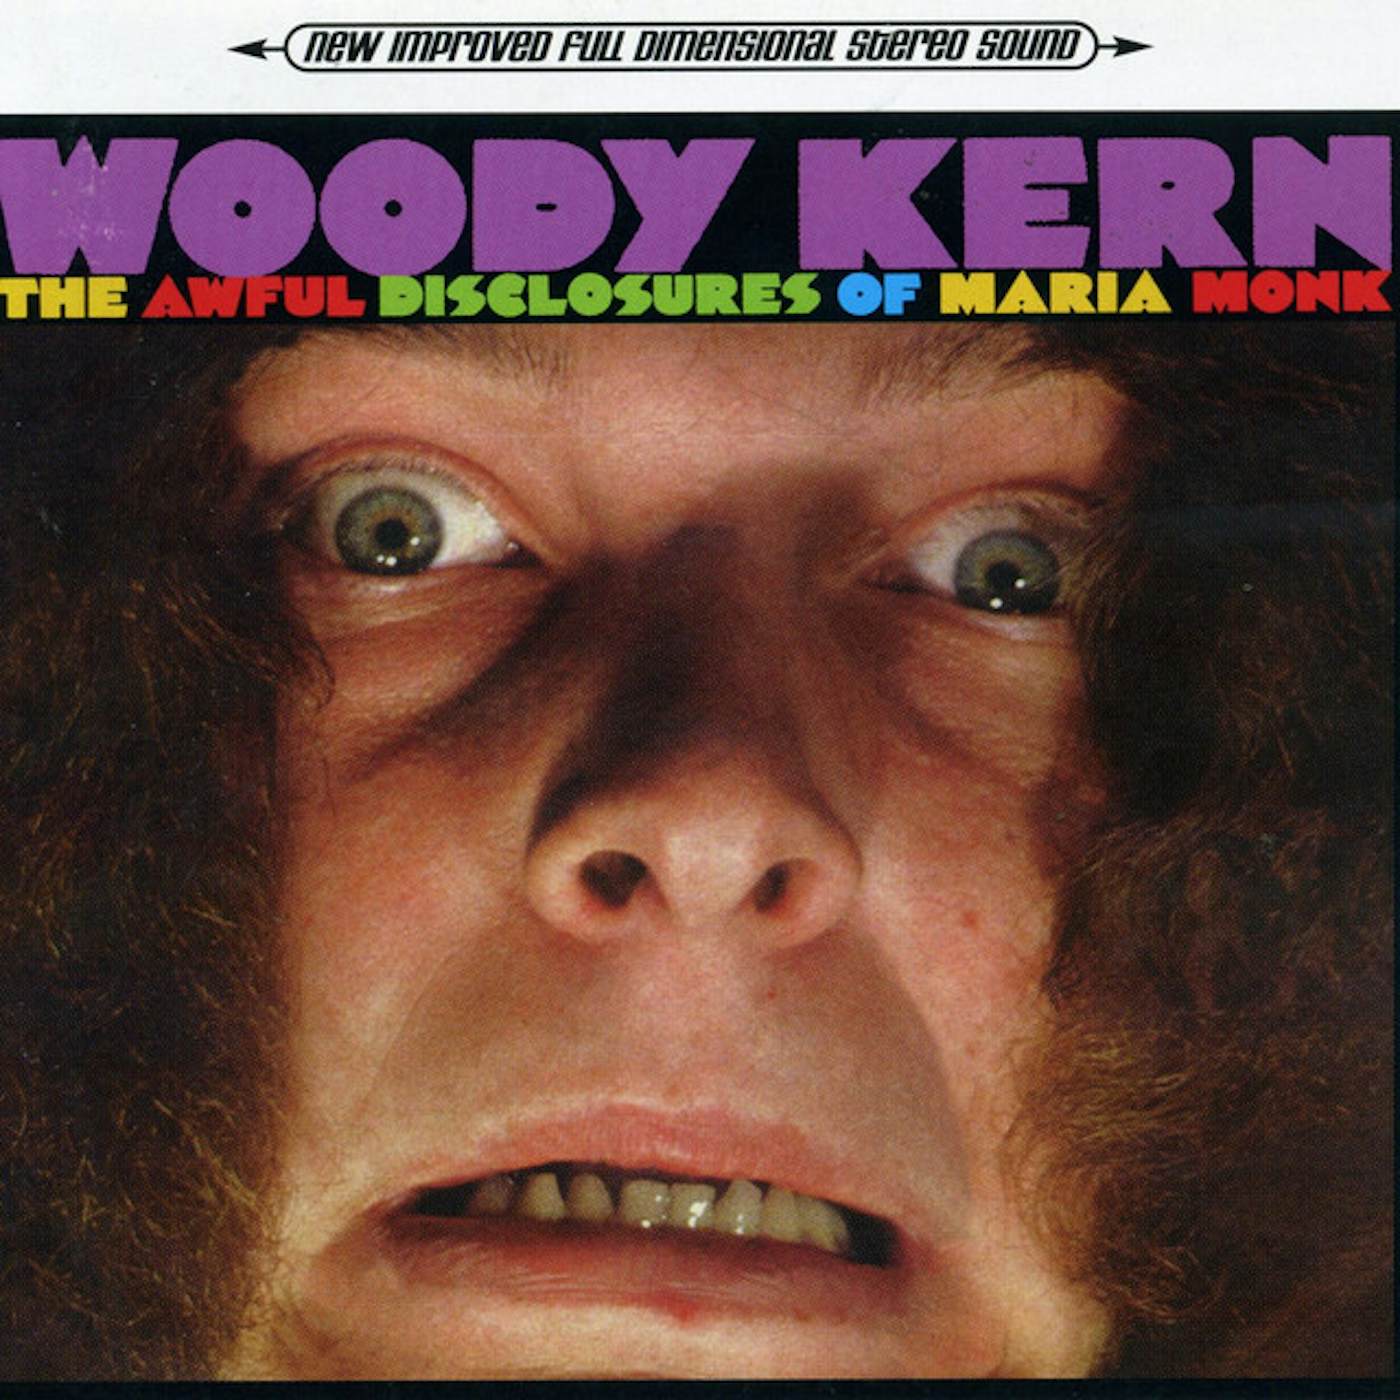 Woody Kern AWFUL DISCLOSURE OF MARIA Vinyl Record